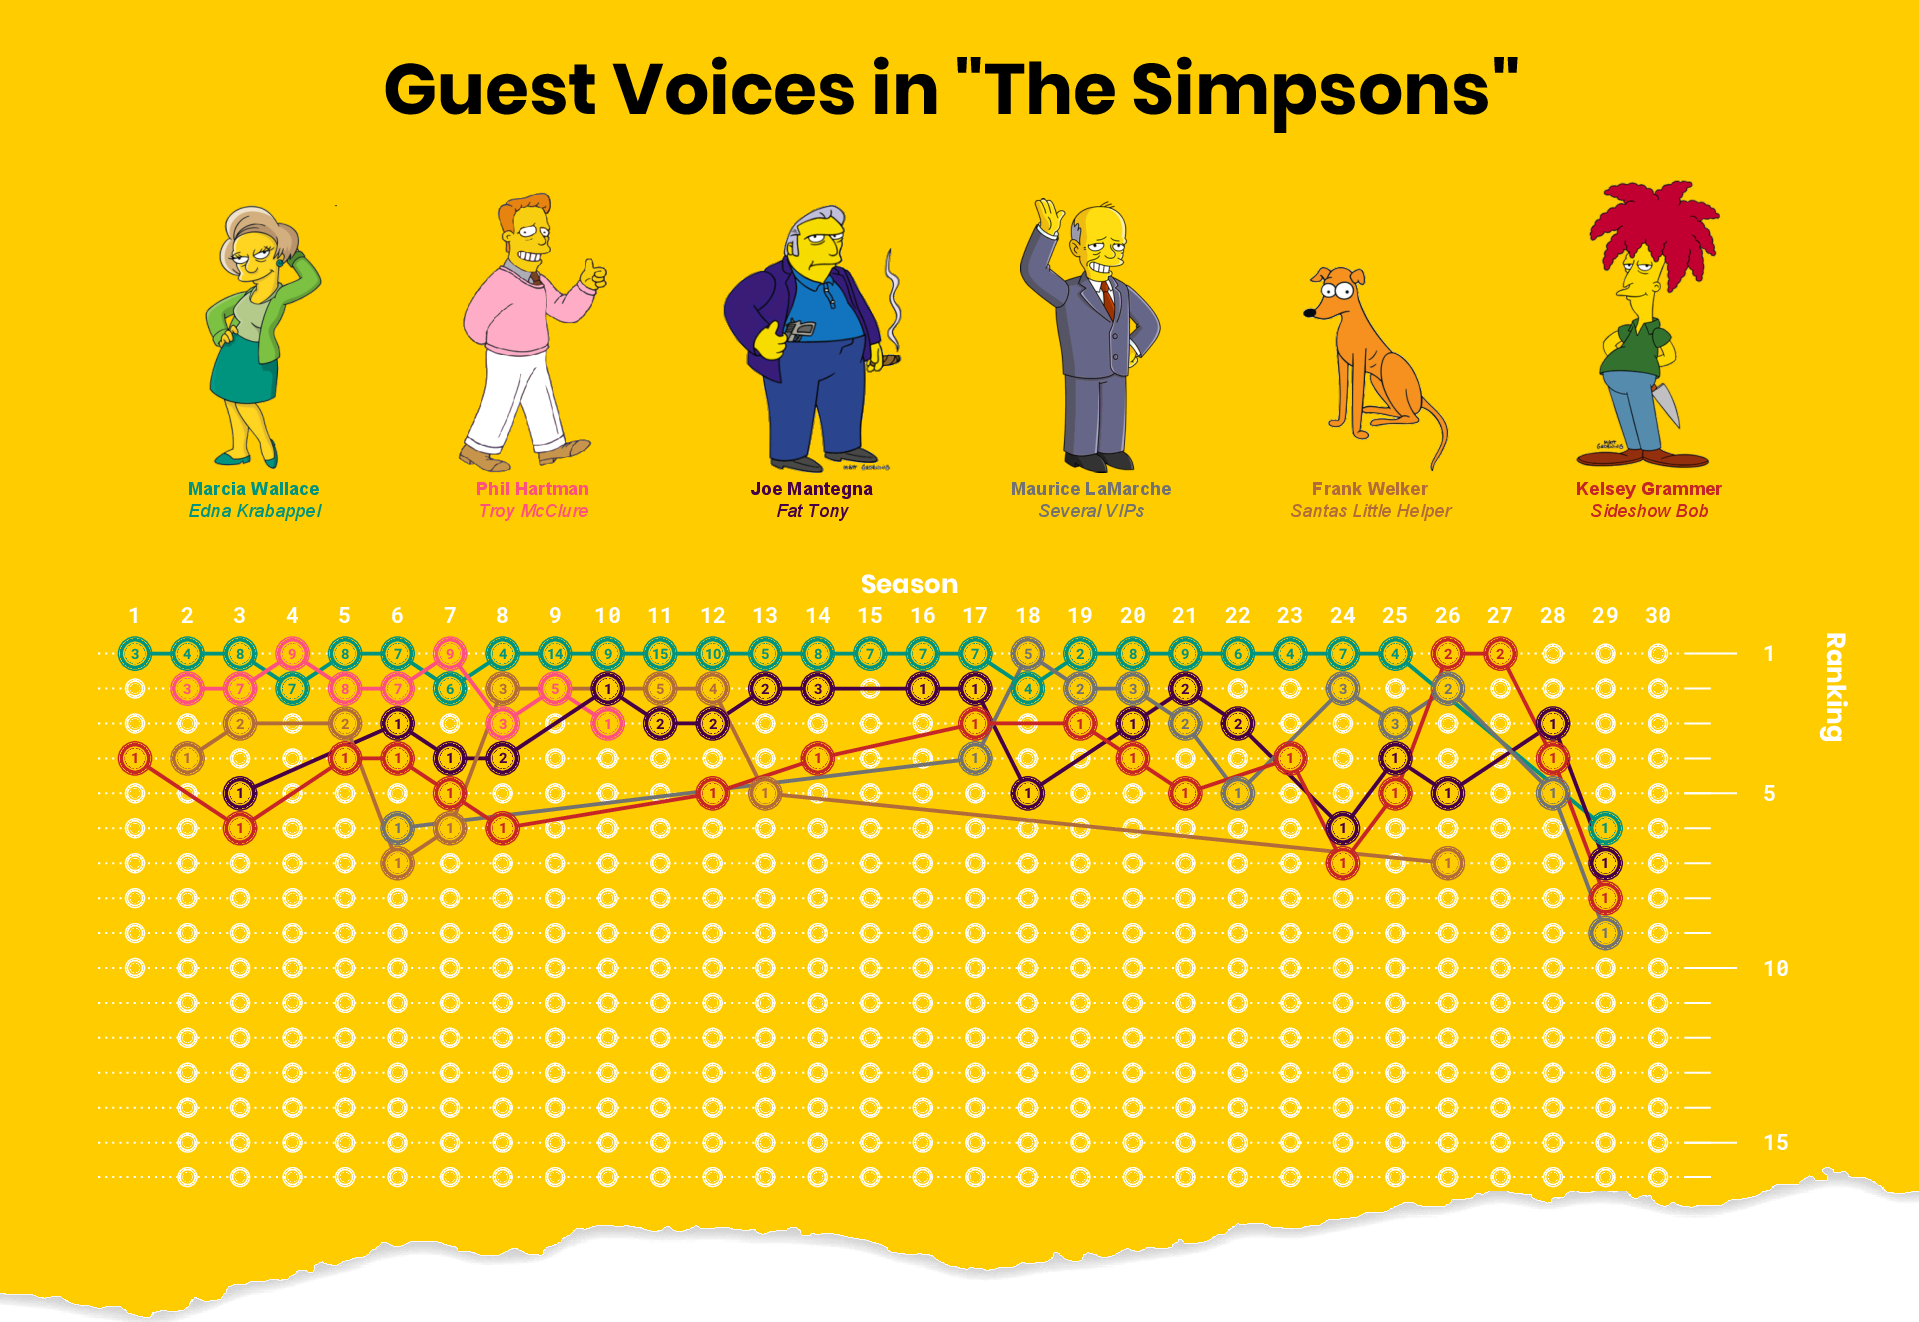 ./plots/2019_35/2019_35_SimpsonsGuests_teaser.png